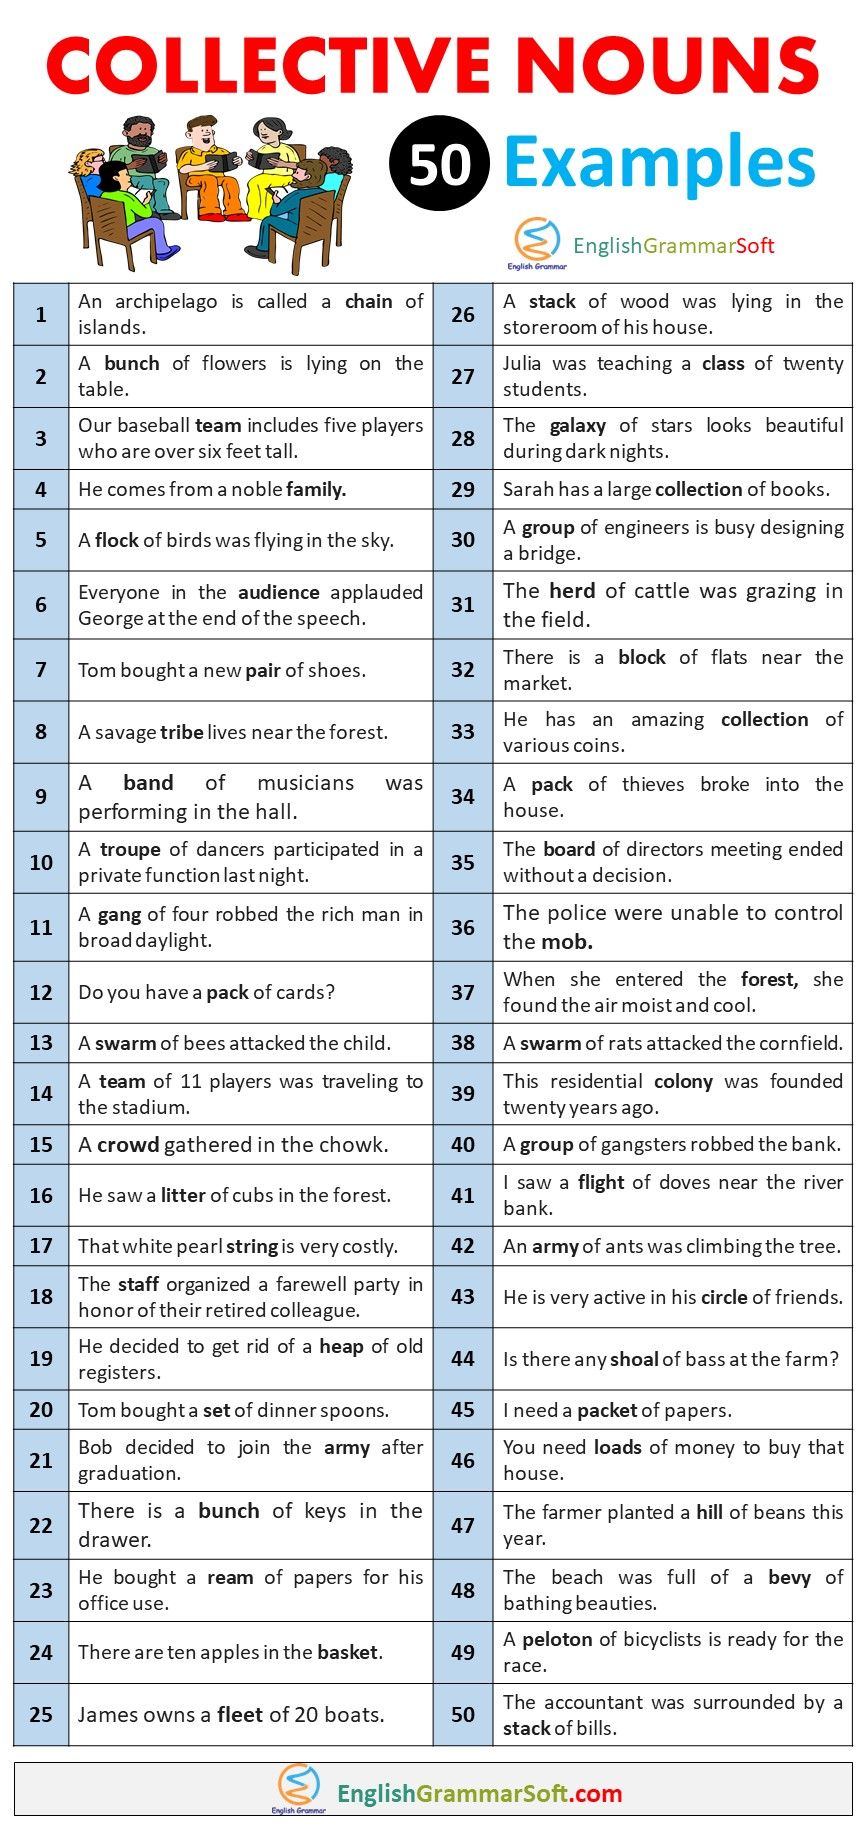 Collective Nouns Sentences (50 Examples) - EnglishGrammarSoft